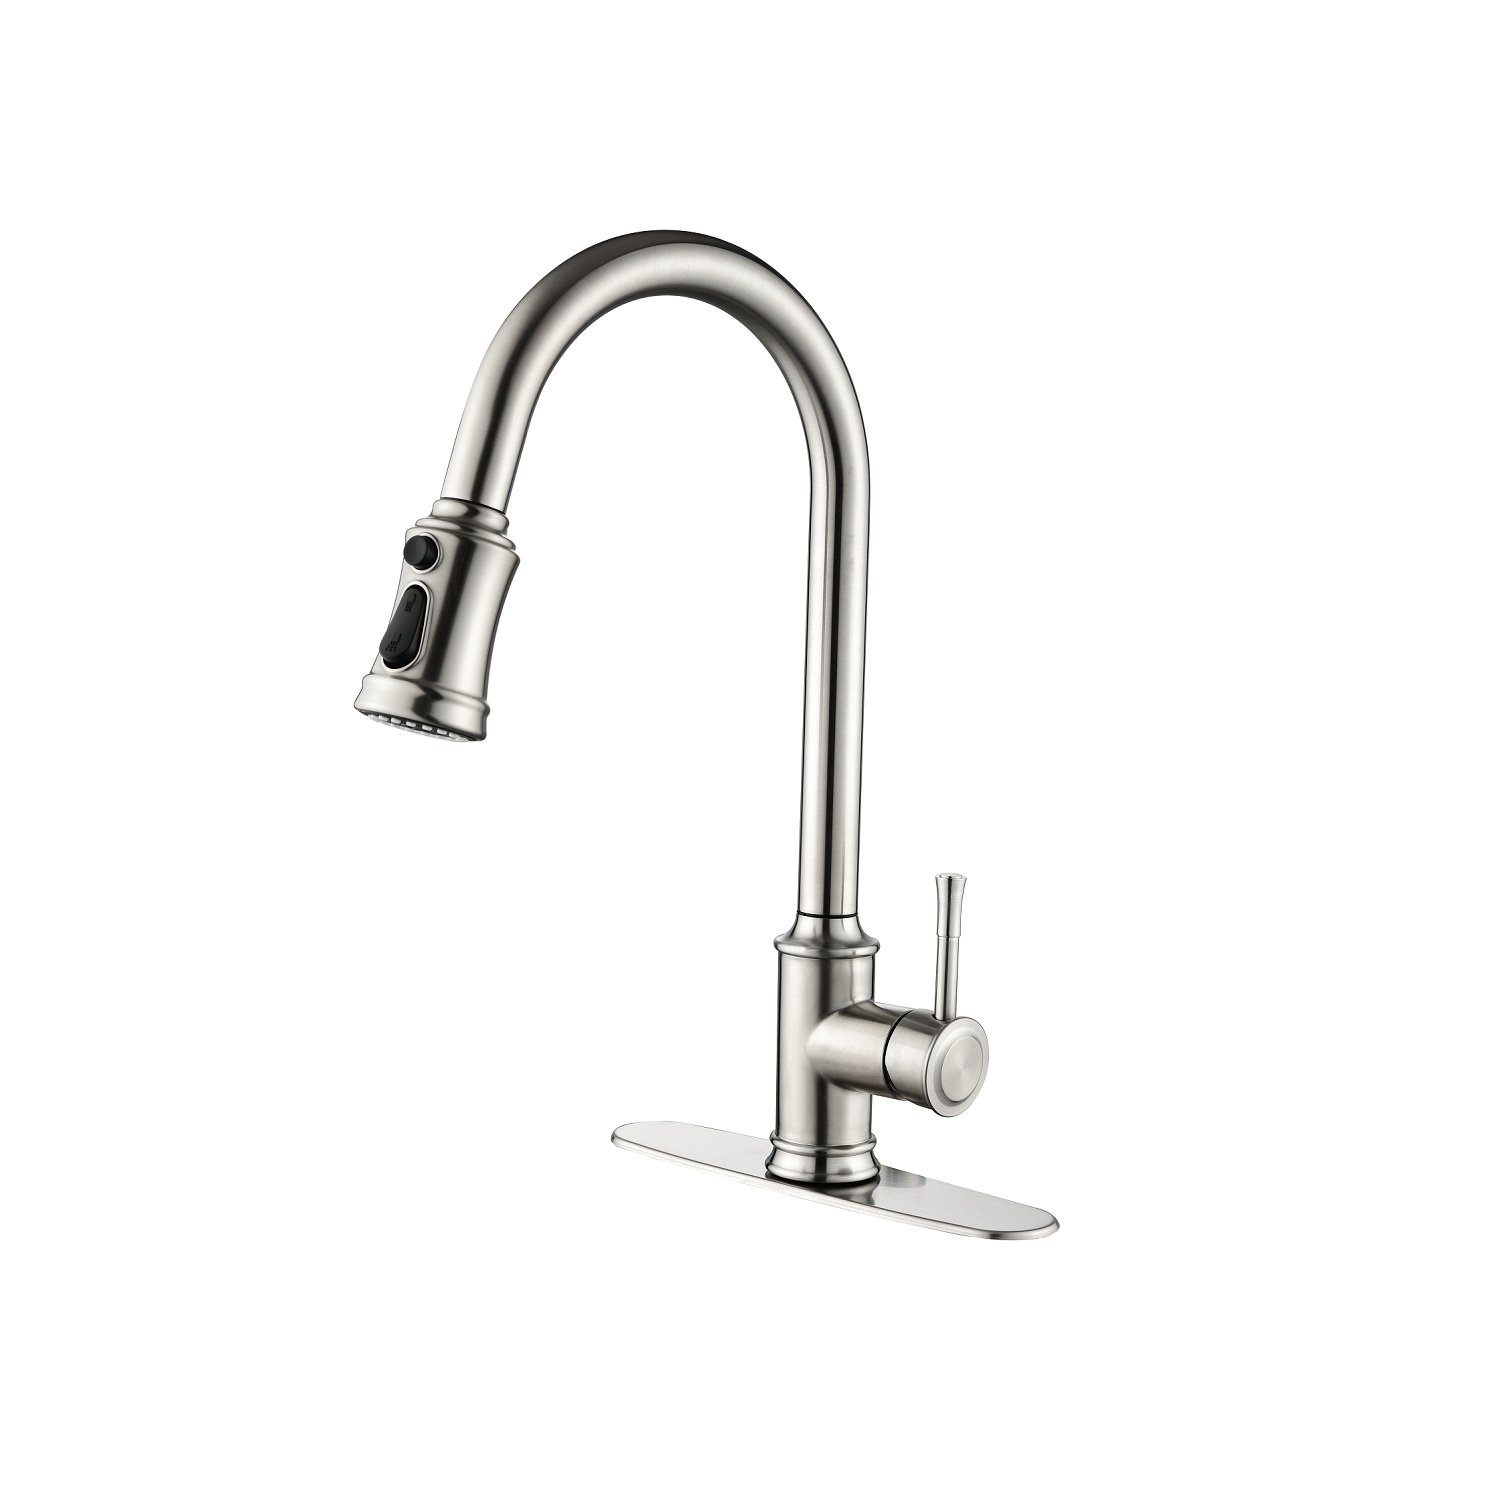 CASAINC Touch Kitchen Faucet with Pull Down Sprayer-CASAINC